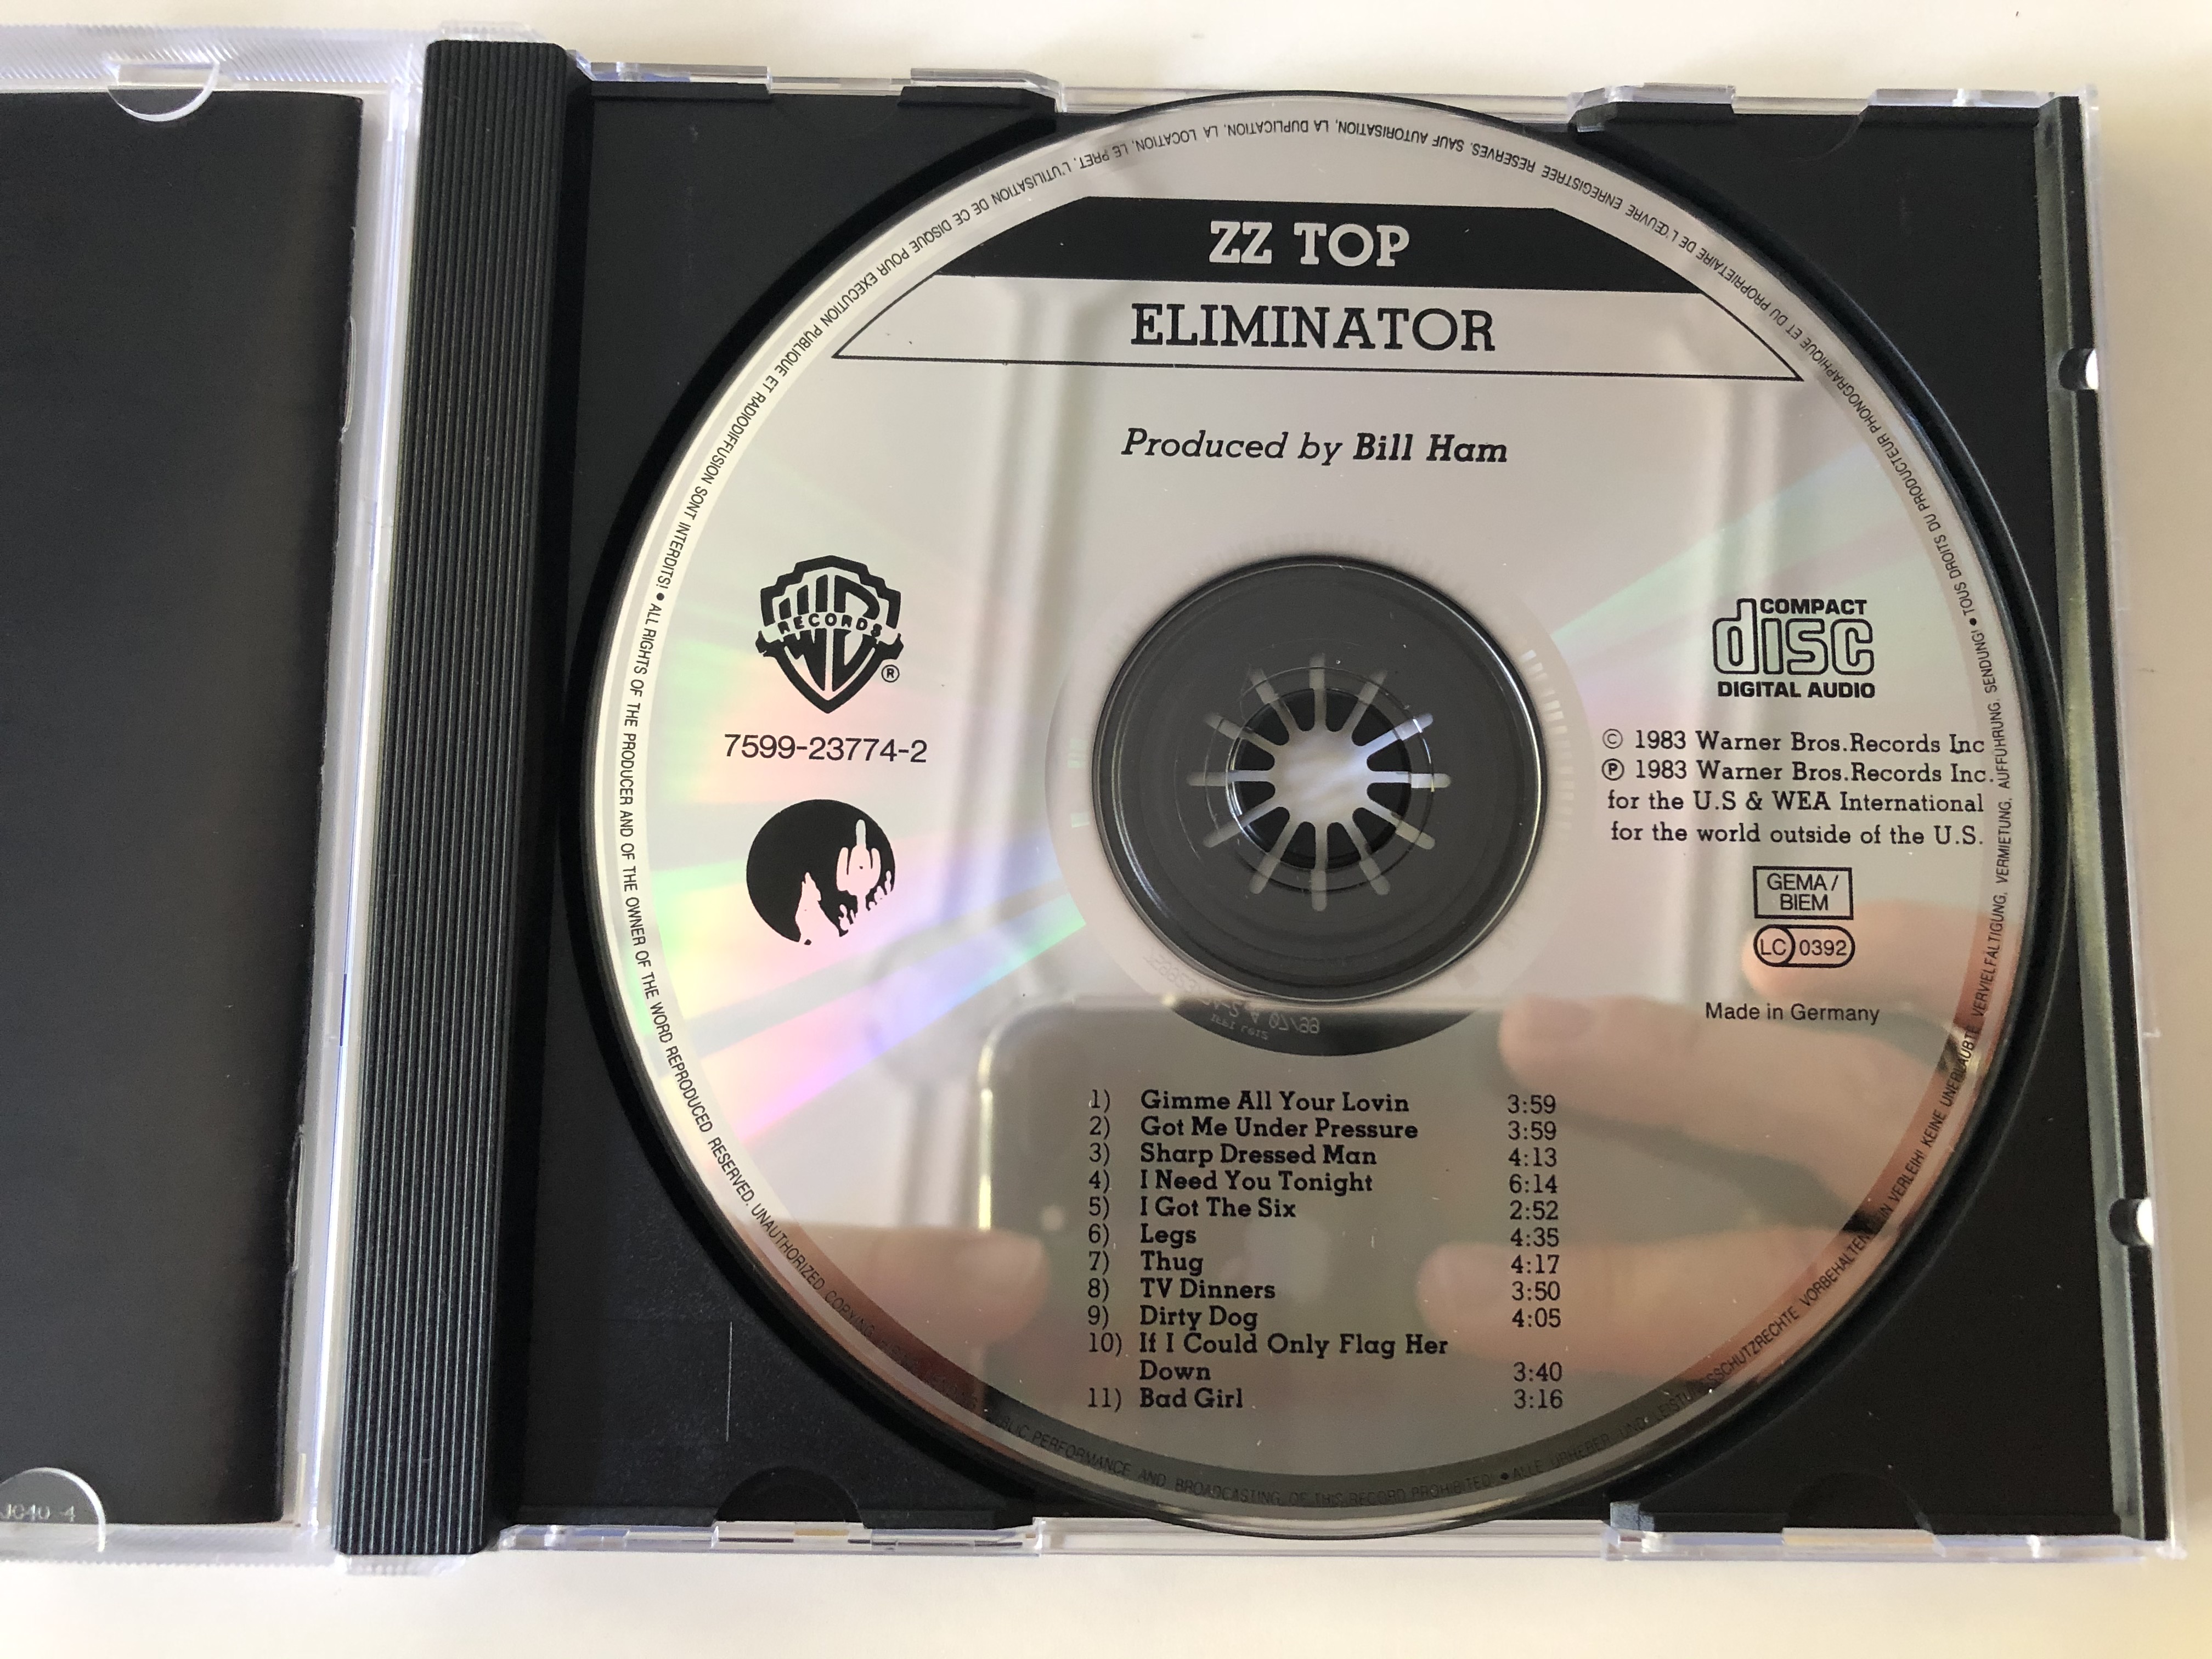 zz-top-eliminator-warner-bros.-records-audio-cd-1983-7599-23774-2-6-.jpg